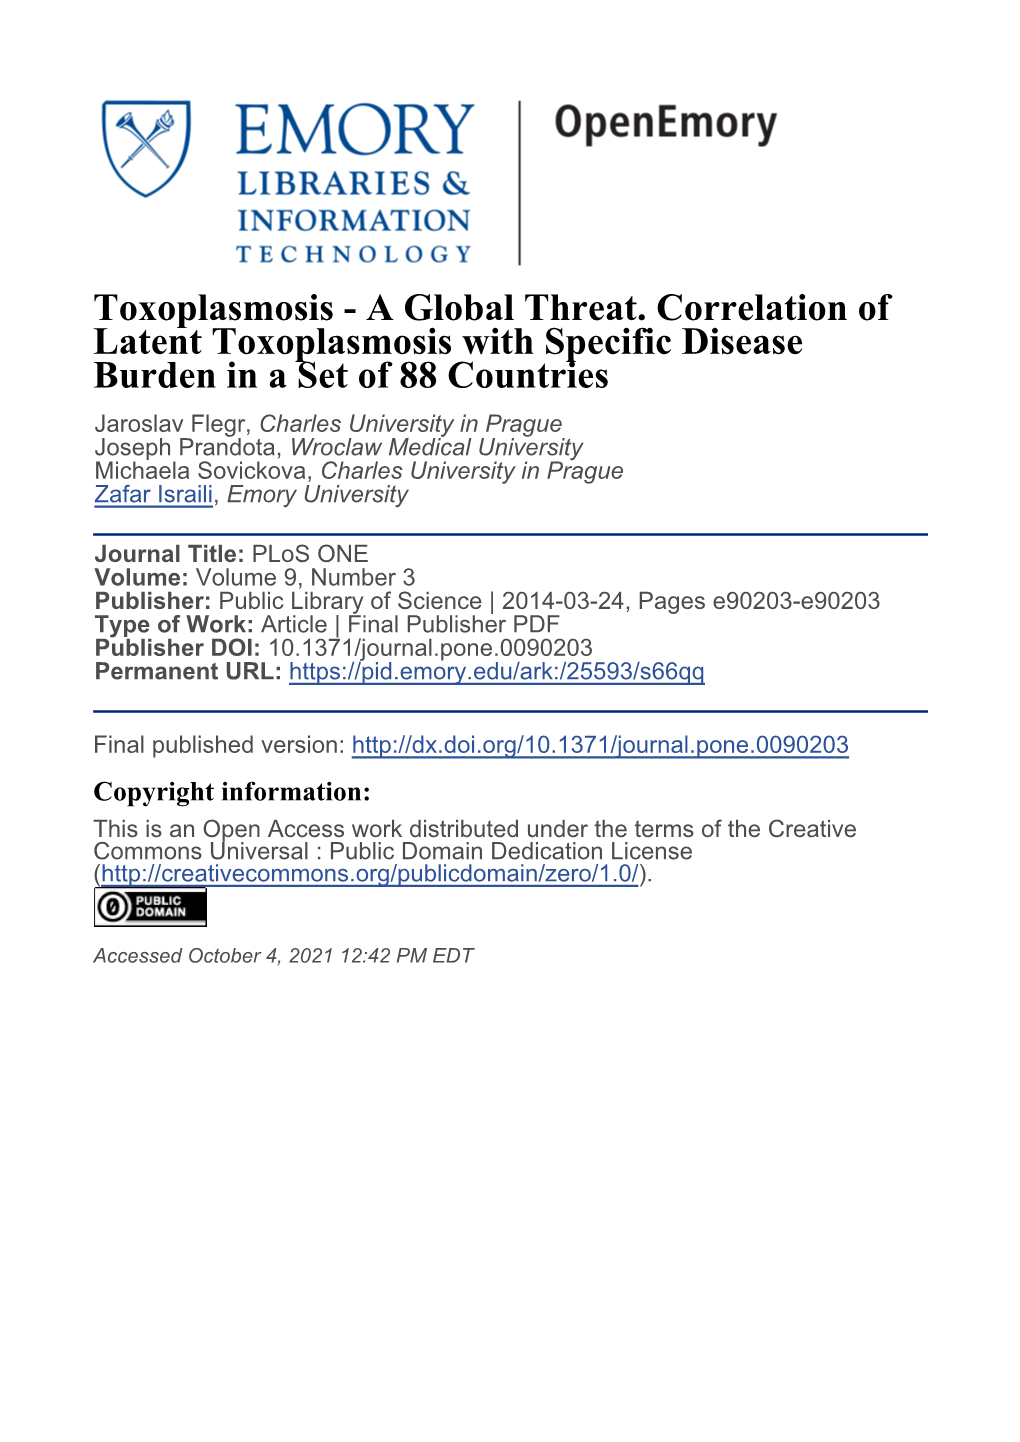 Toxoplasmosis - a Global Threat